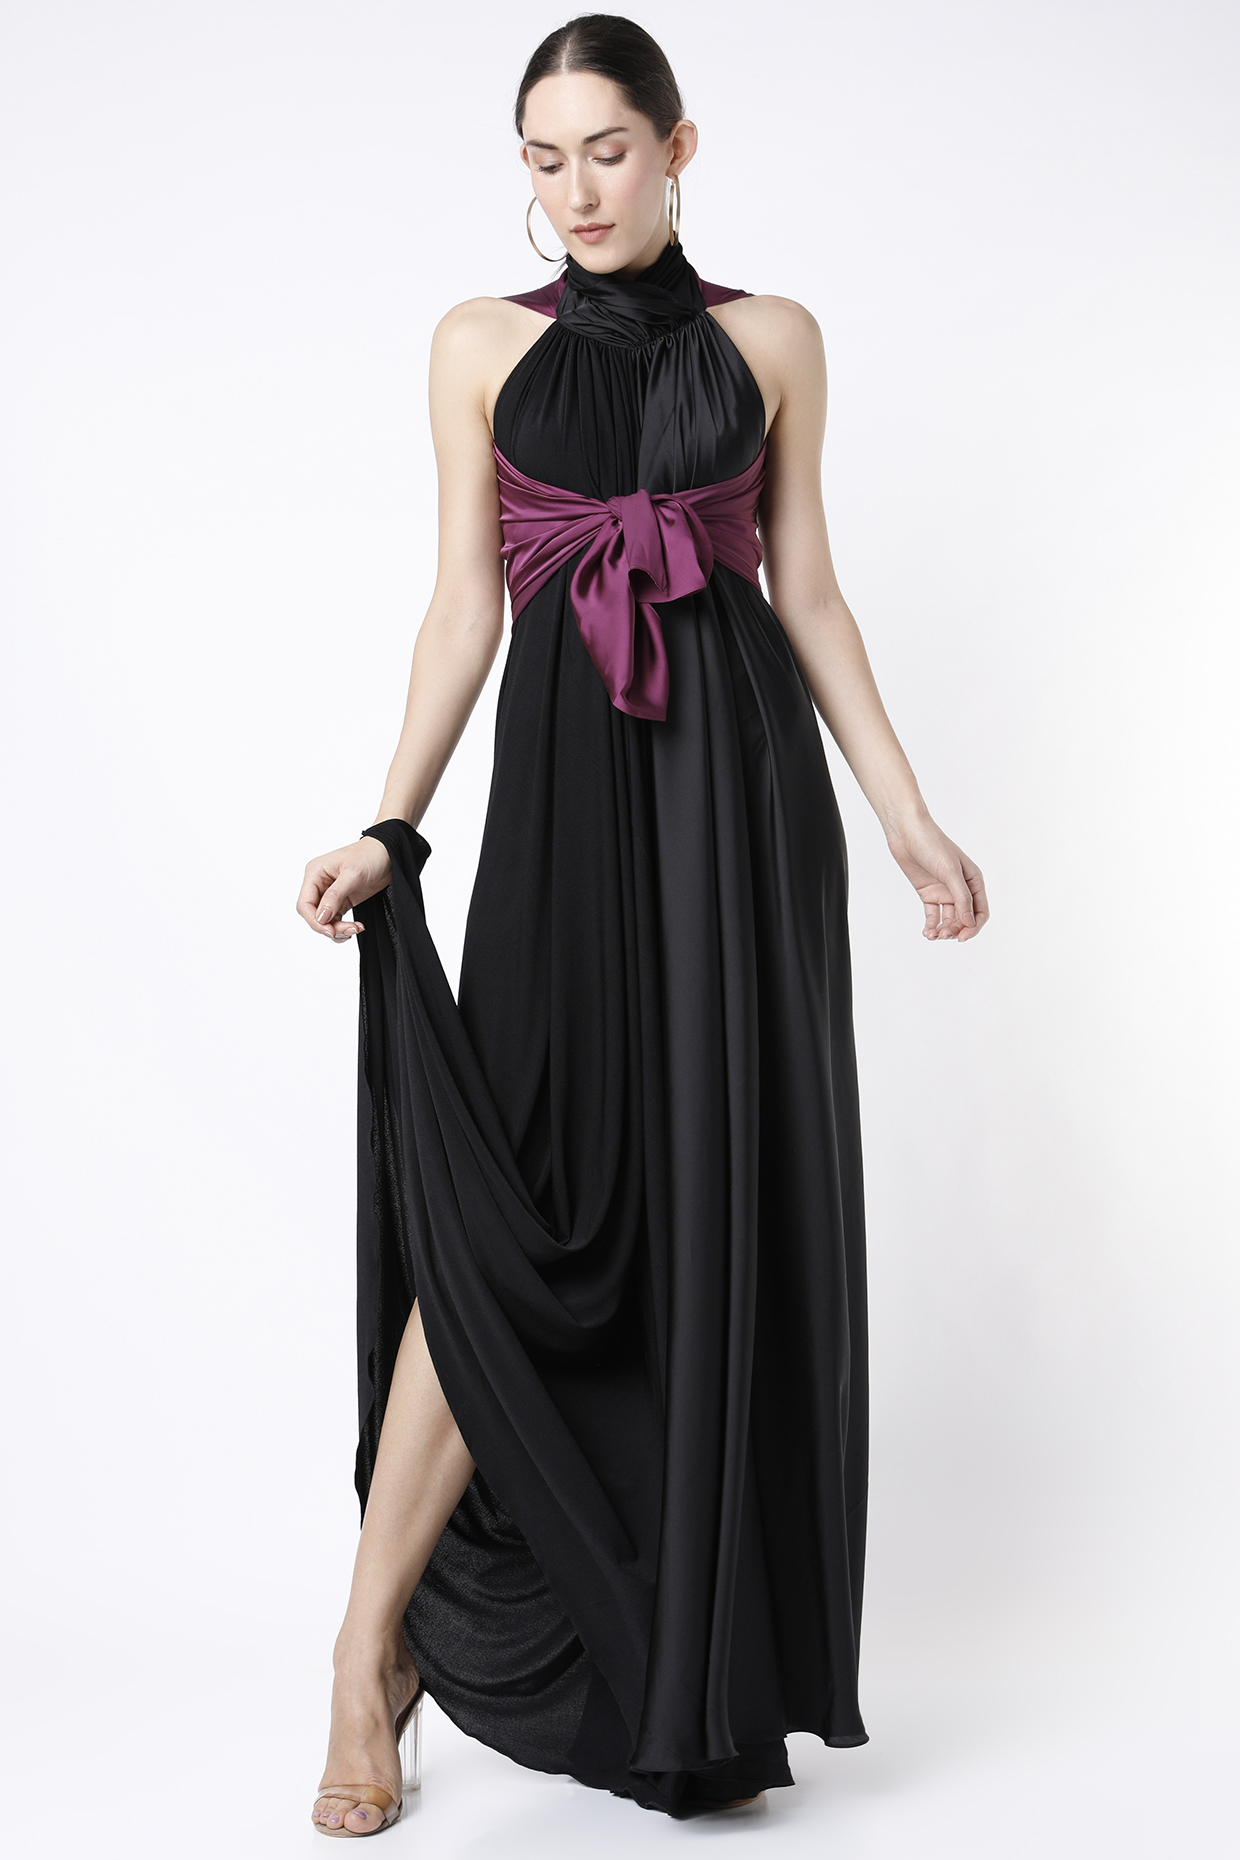 Black Jumpsuit Gown With Wine Tie-Up Cape